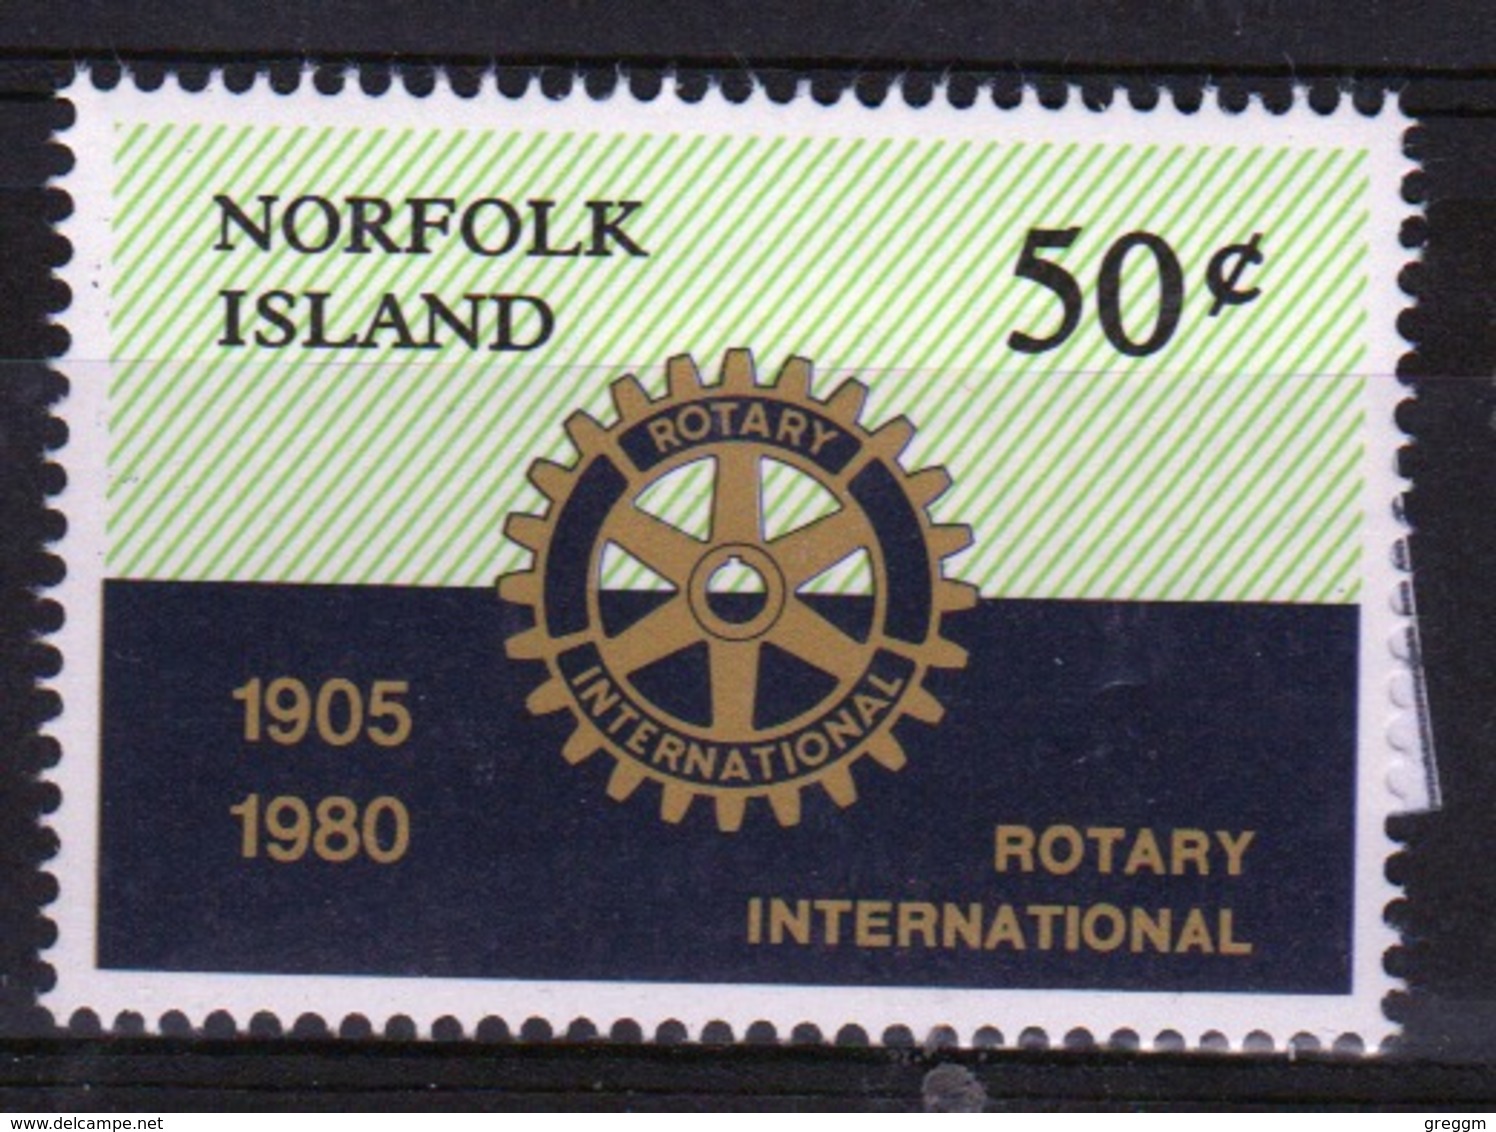 Norfolk Island Single 50c  Stamp To Celebrate Rotary International. - Norfolk Island